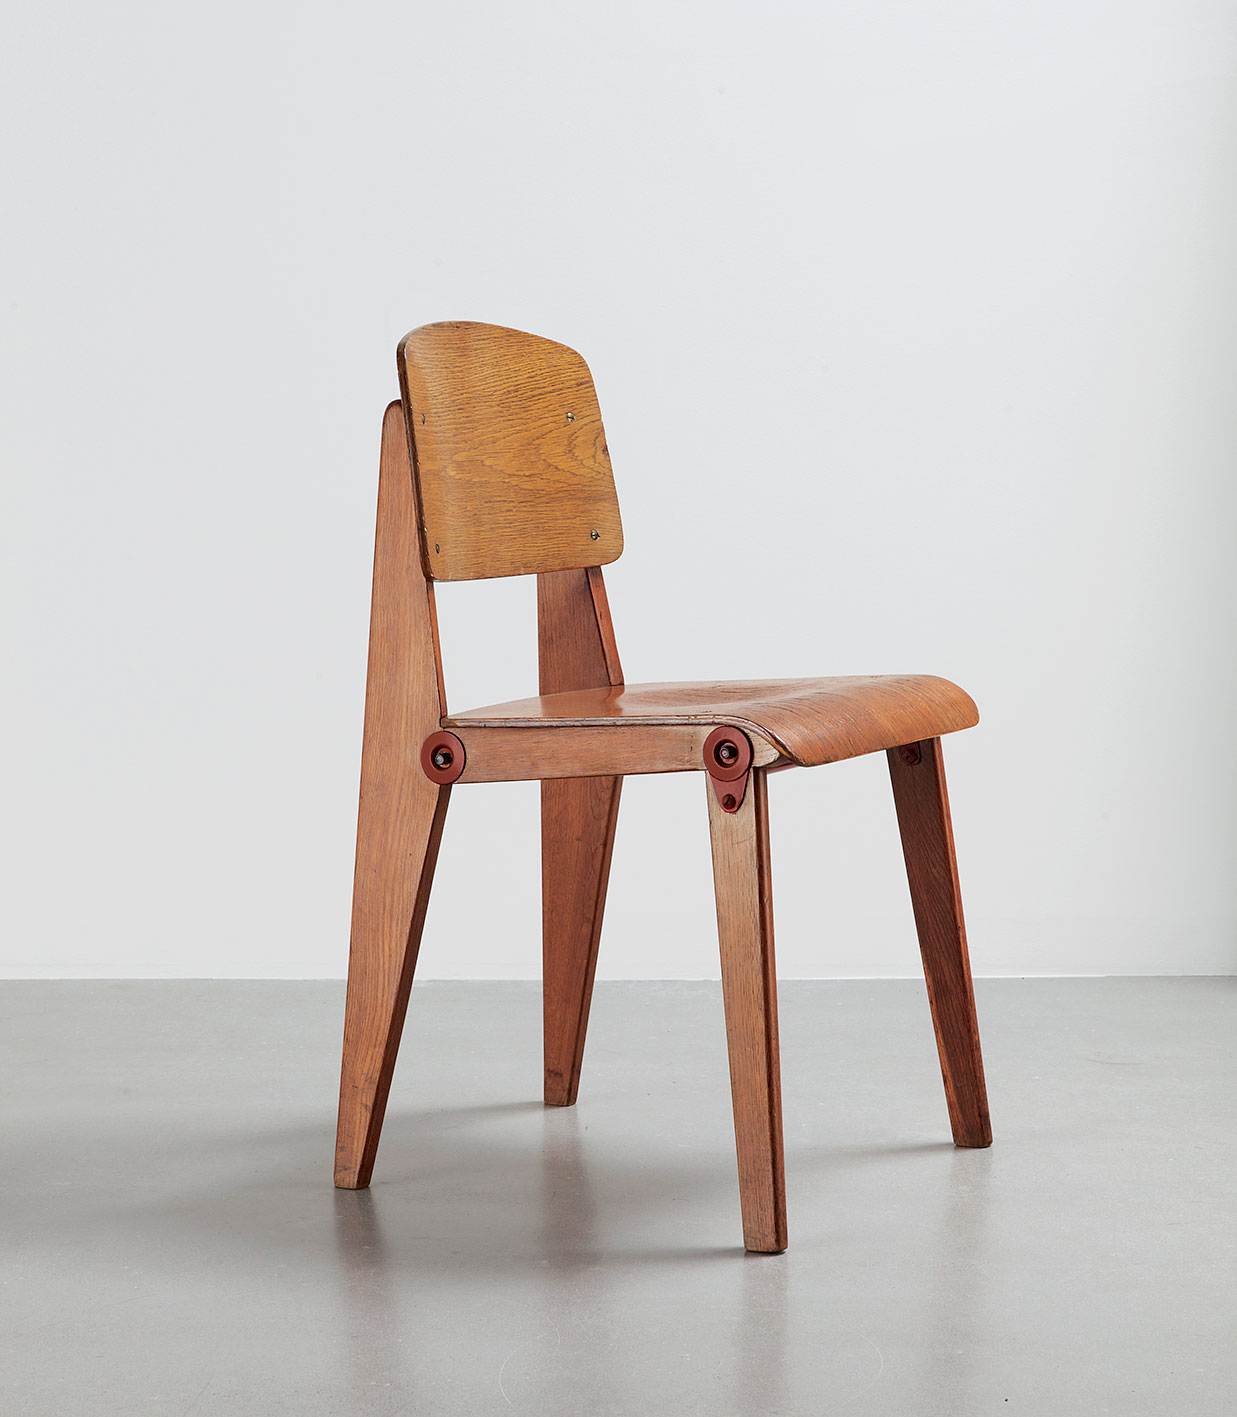 Demountable wooden chair no. 301, 1950.